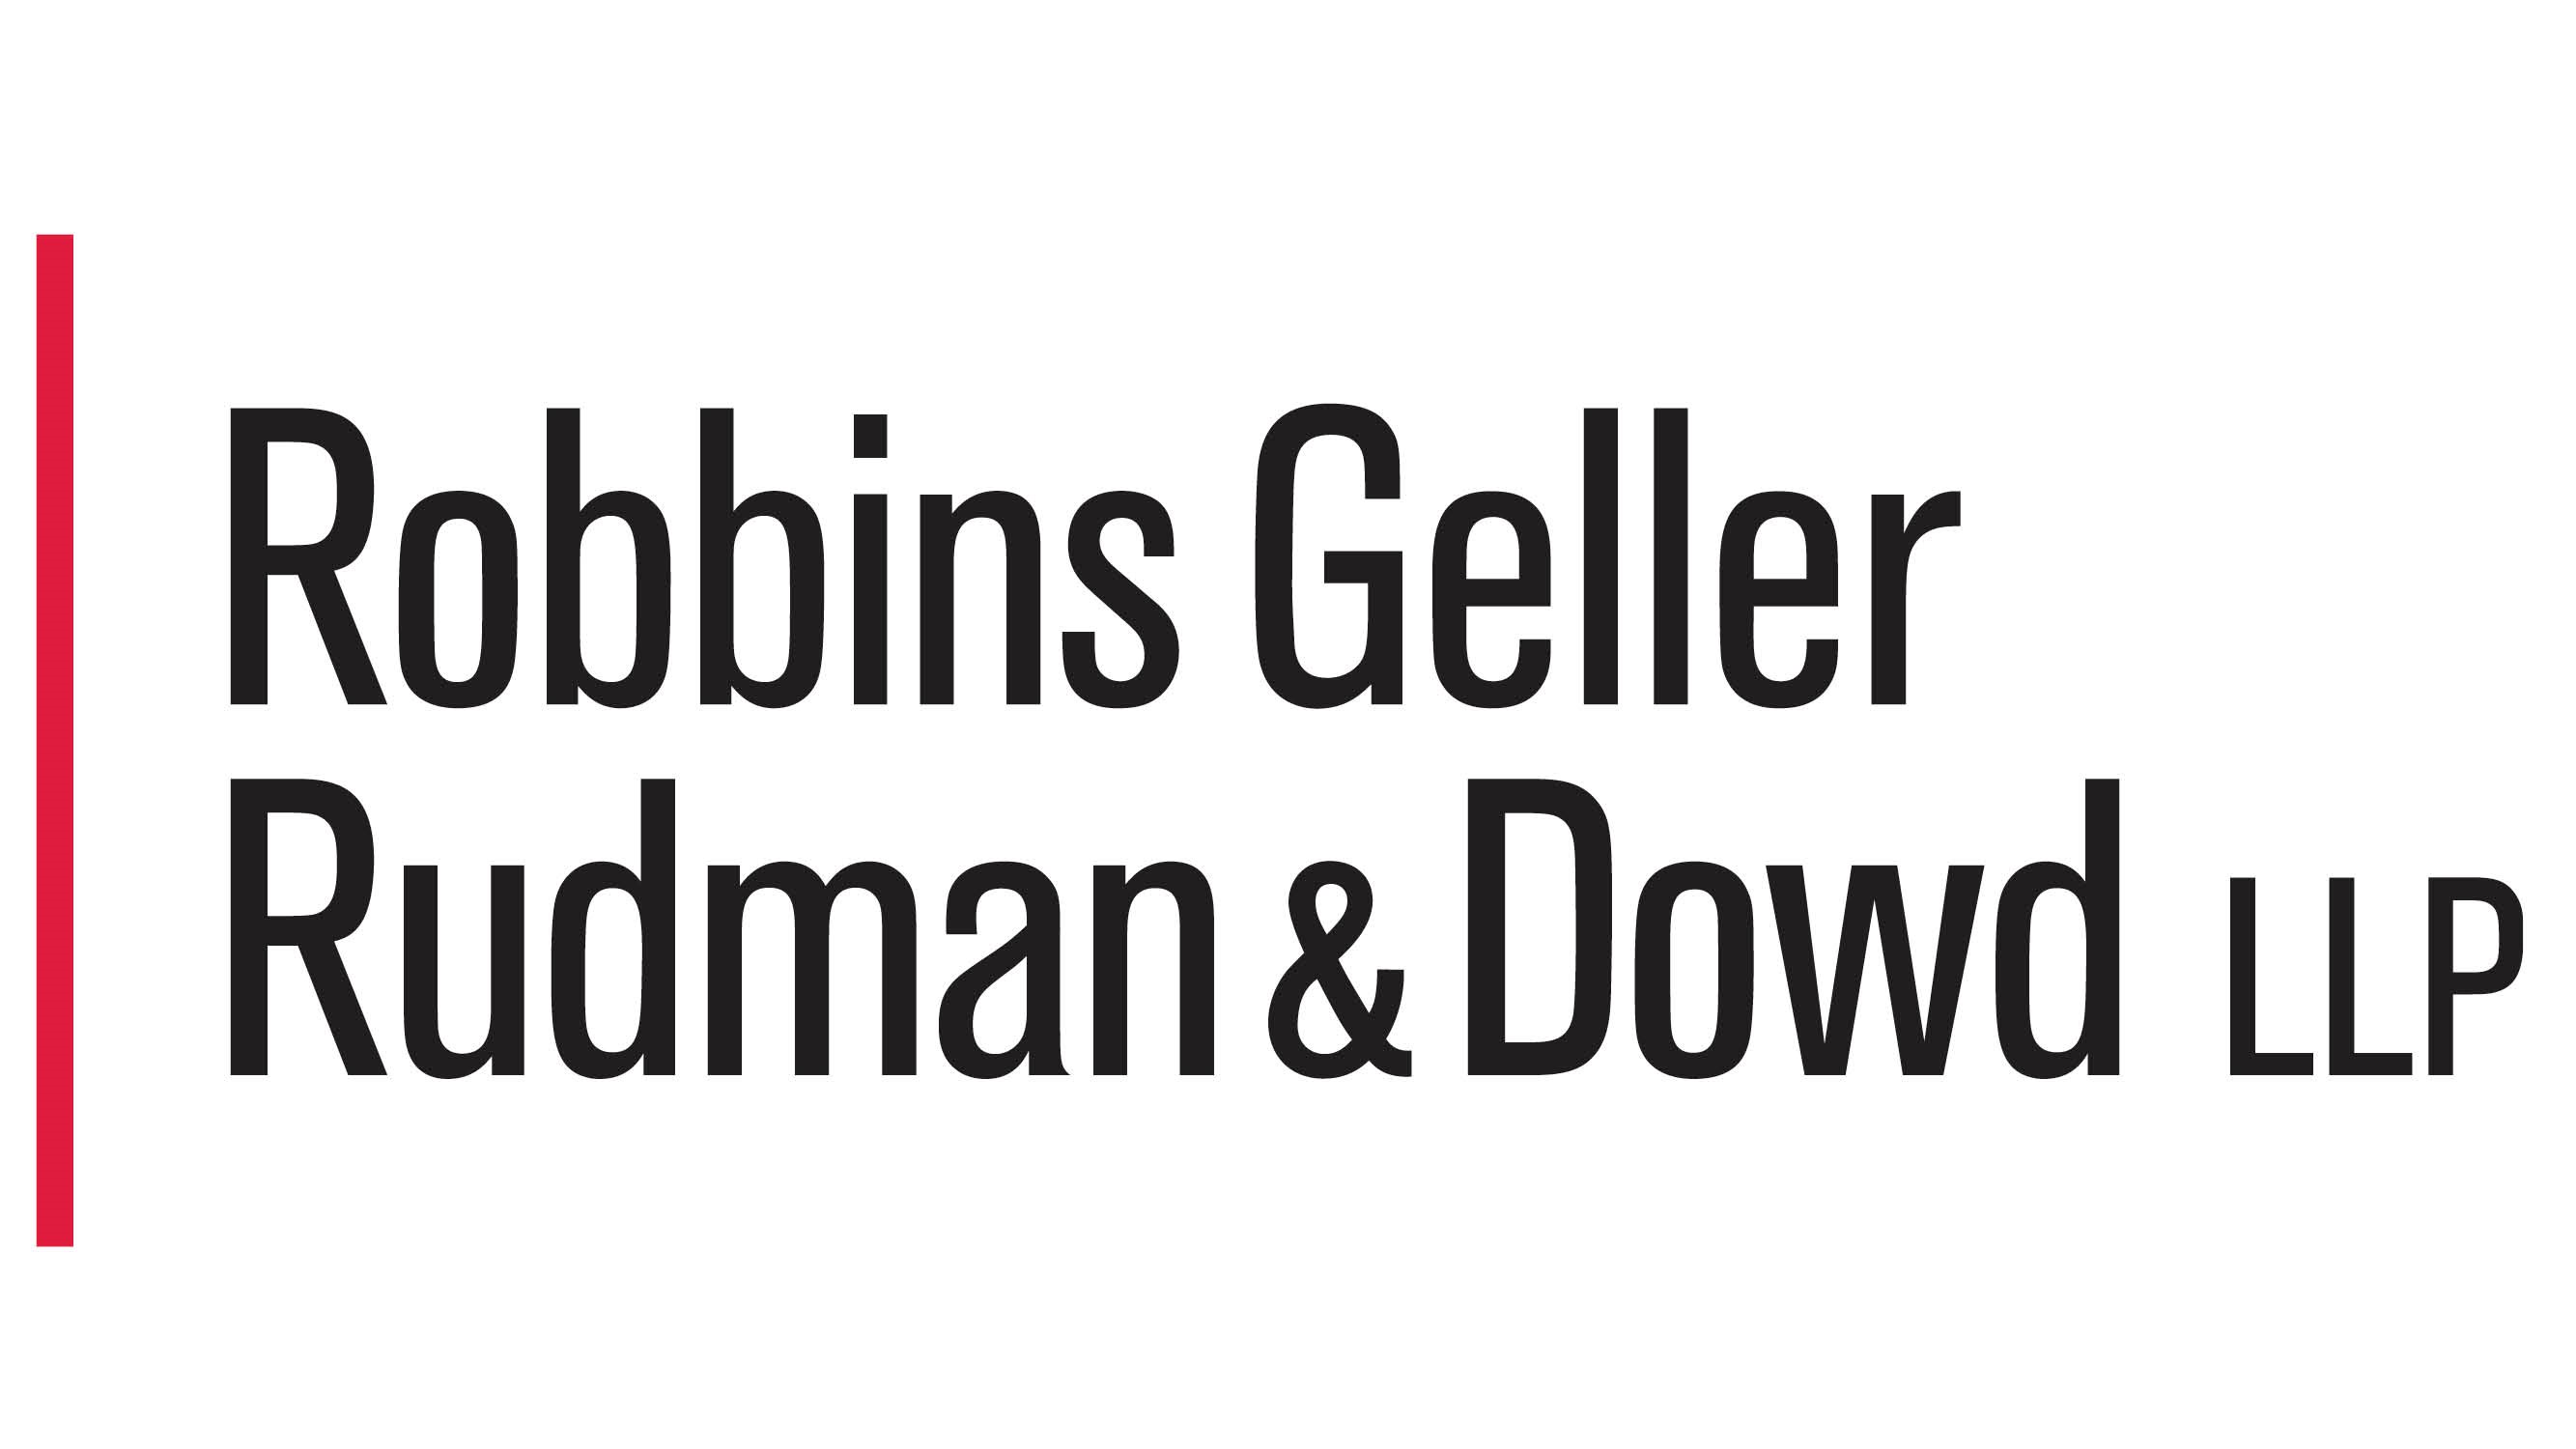 Robbins Geller Rudman & Dowd LLP, Friday, November 26, 2021, Press release picture